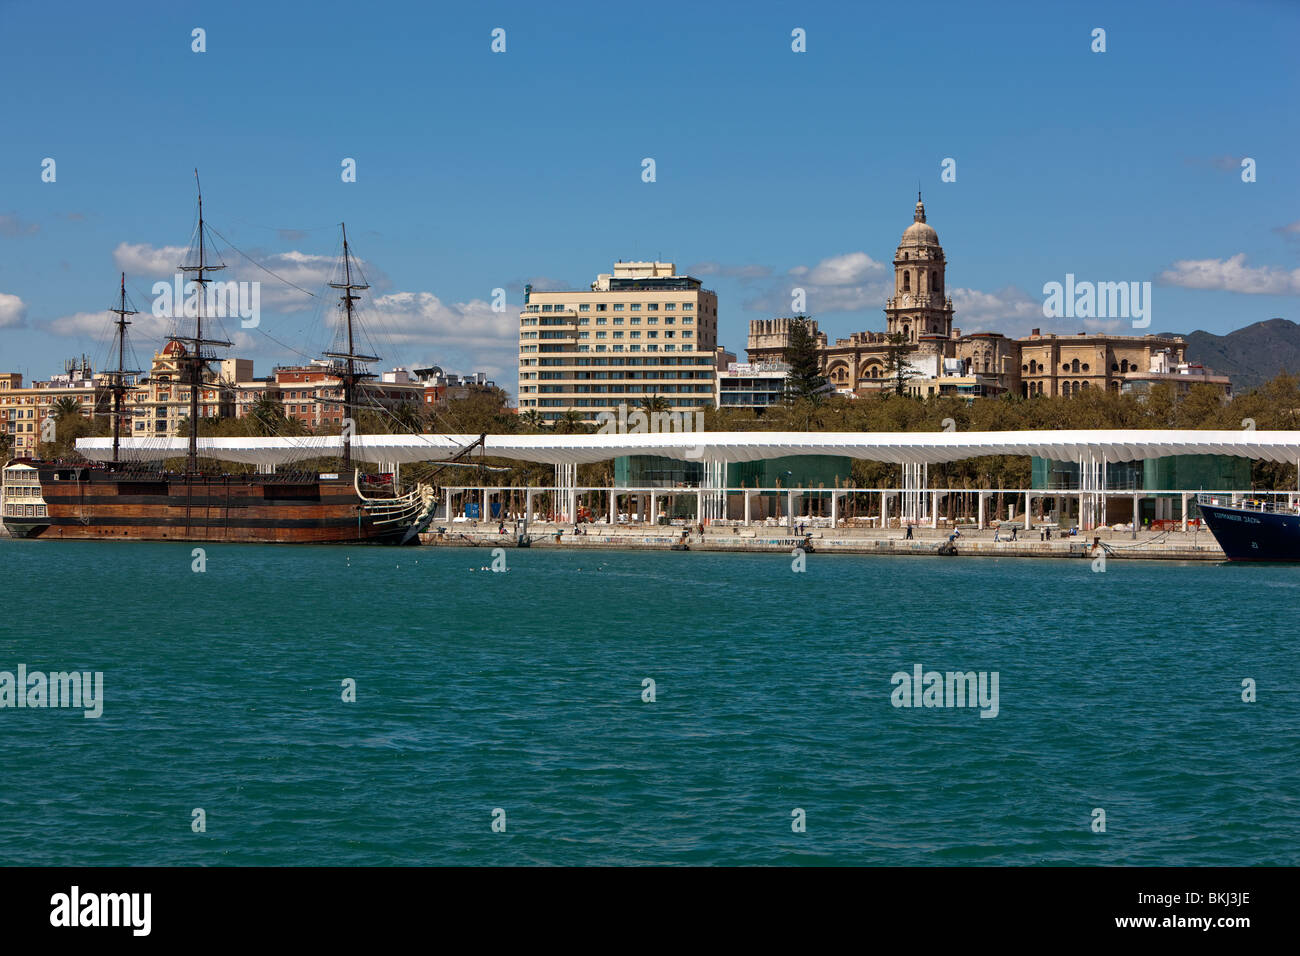 Replica of the Santisima Trinidad warship and Malaga Cathedral. Harbor in Malaga. Andalusia. Spain. Stock Photo